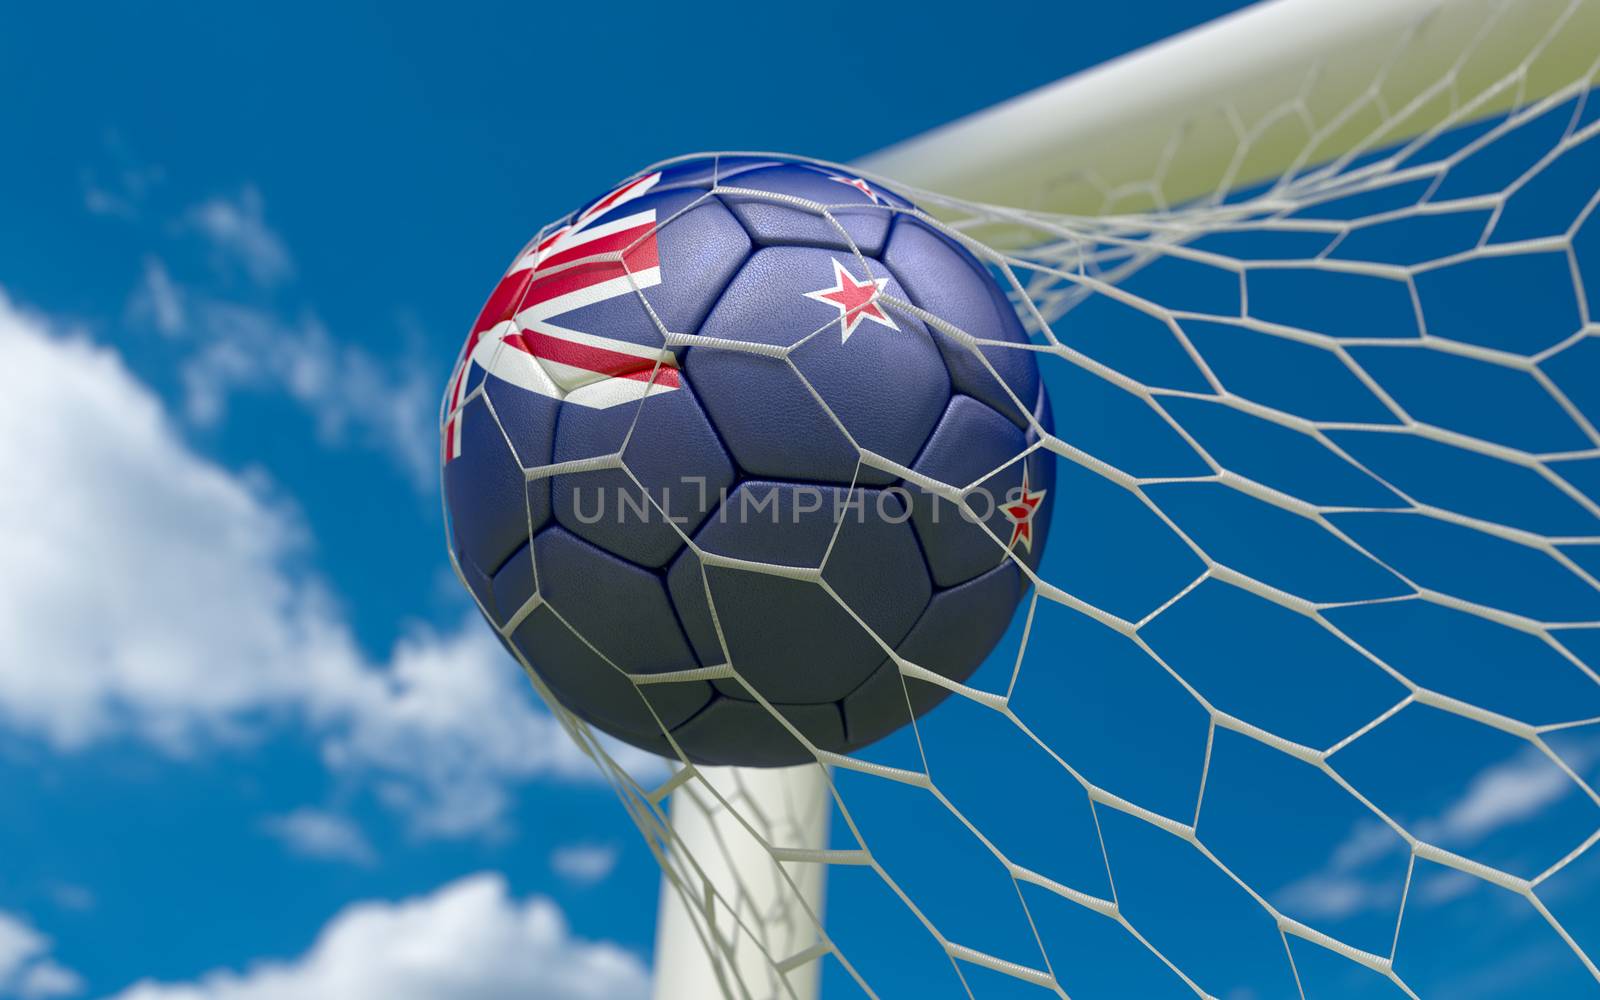 New Zealand flag and soccer ball in goal net by Barbraford